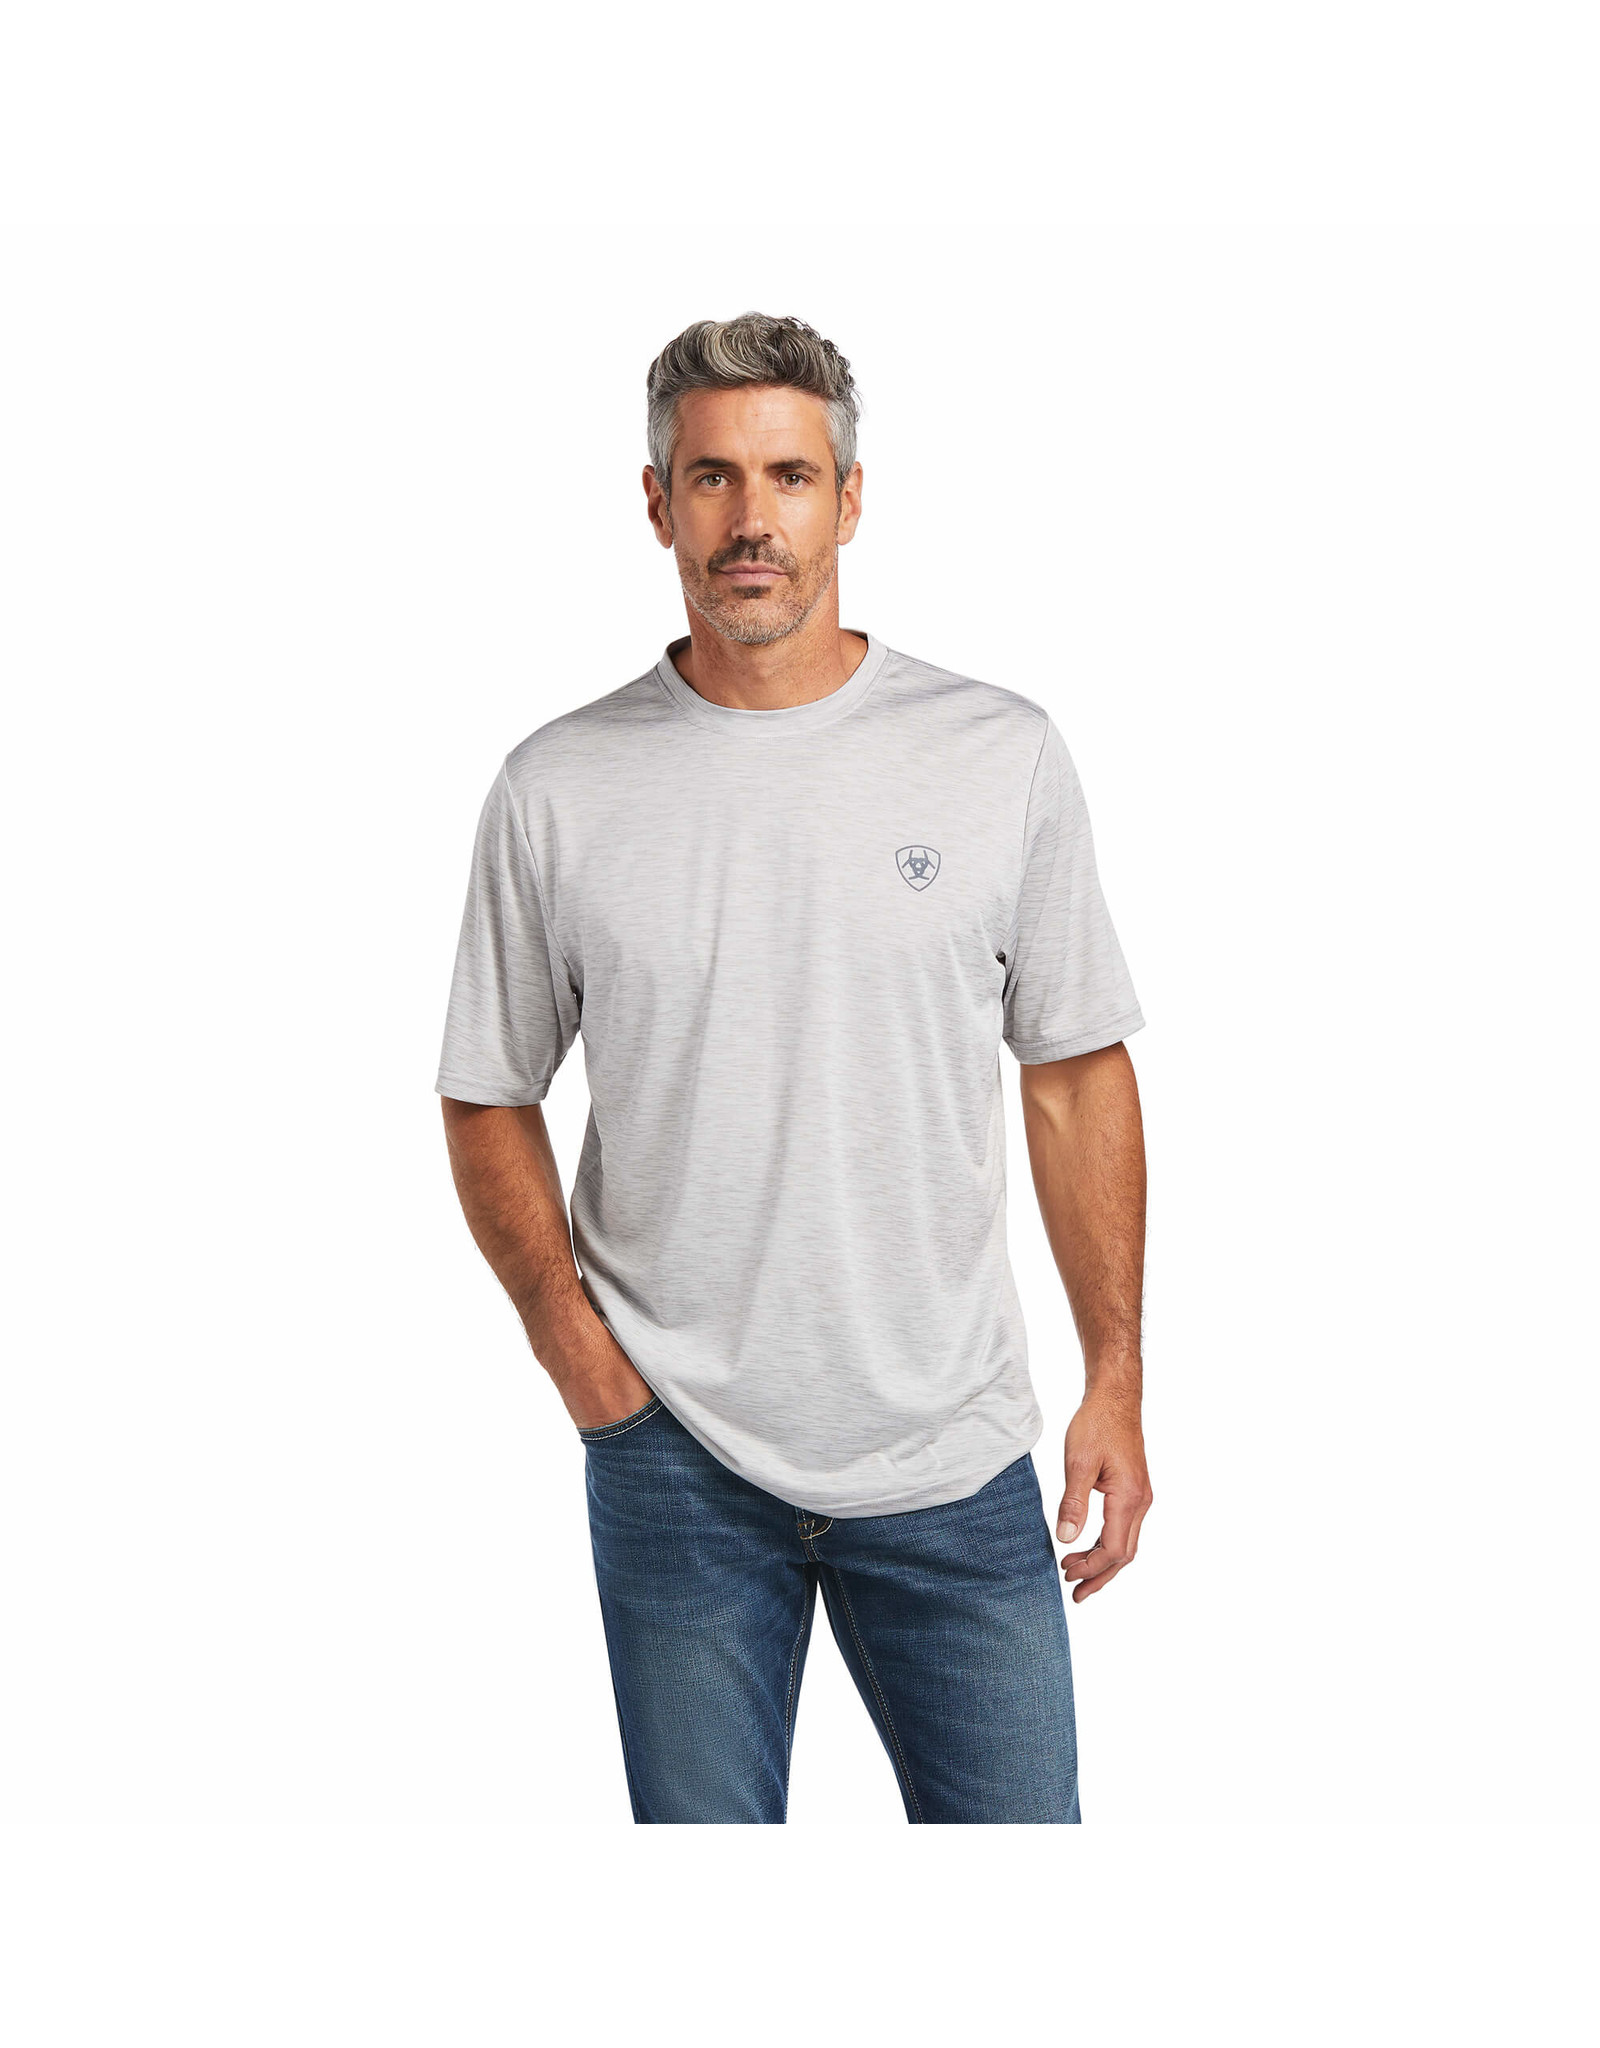 Ariat Men's Charger Shield Echo Gray 10039554 T-Shirt